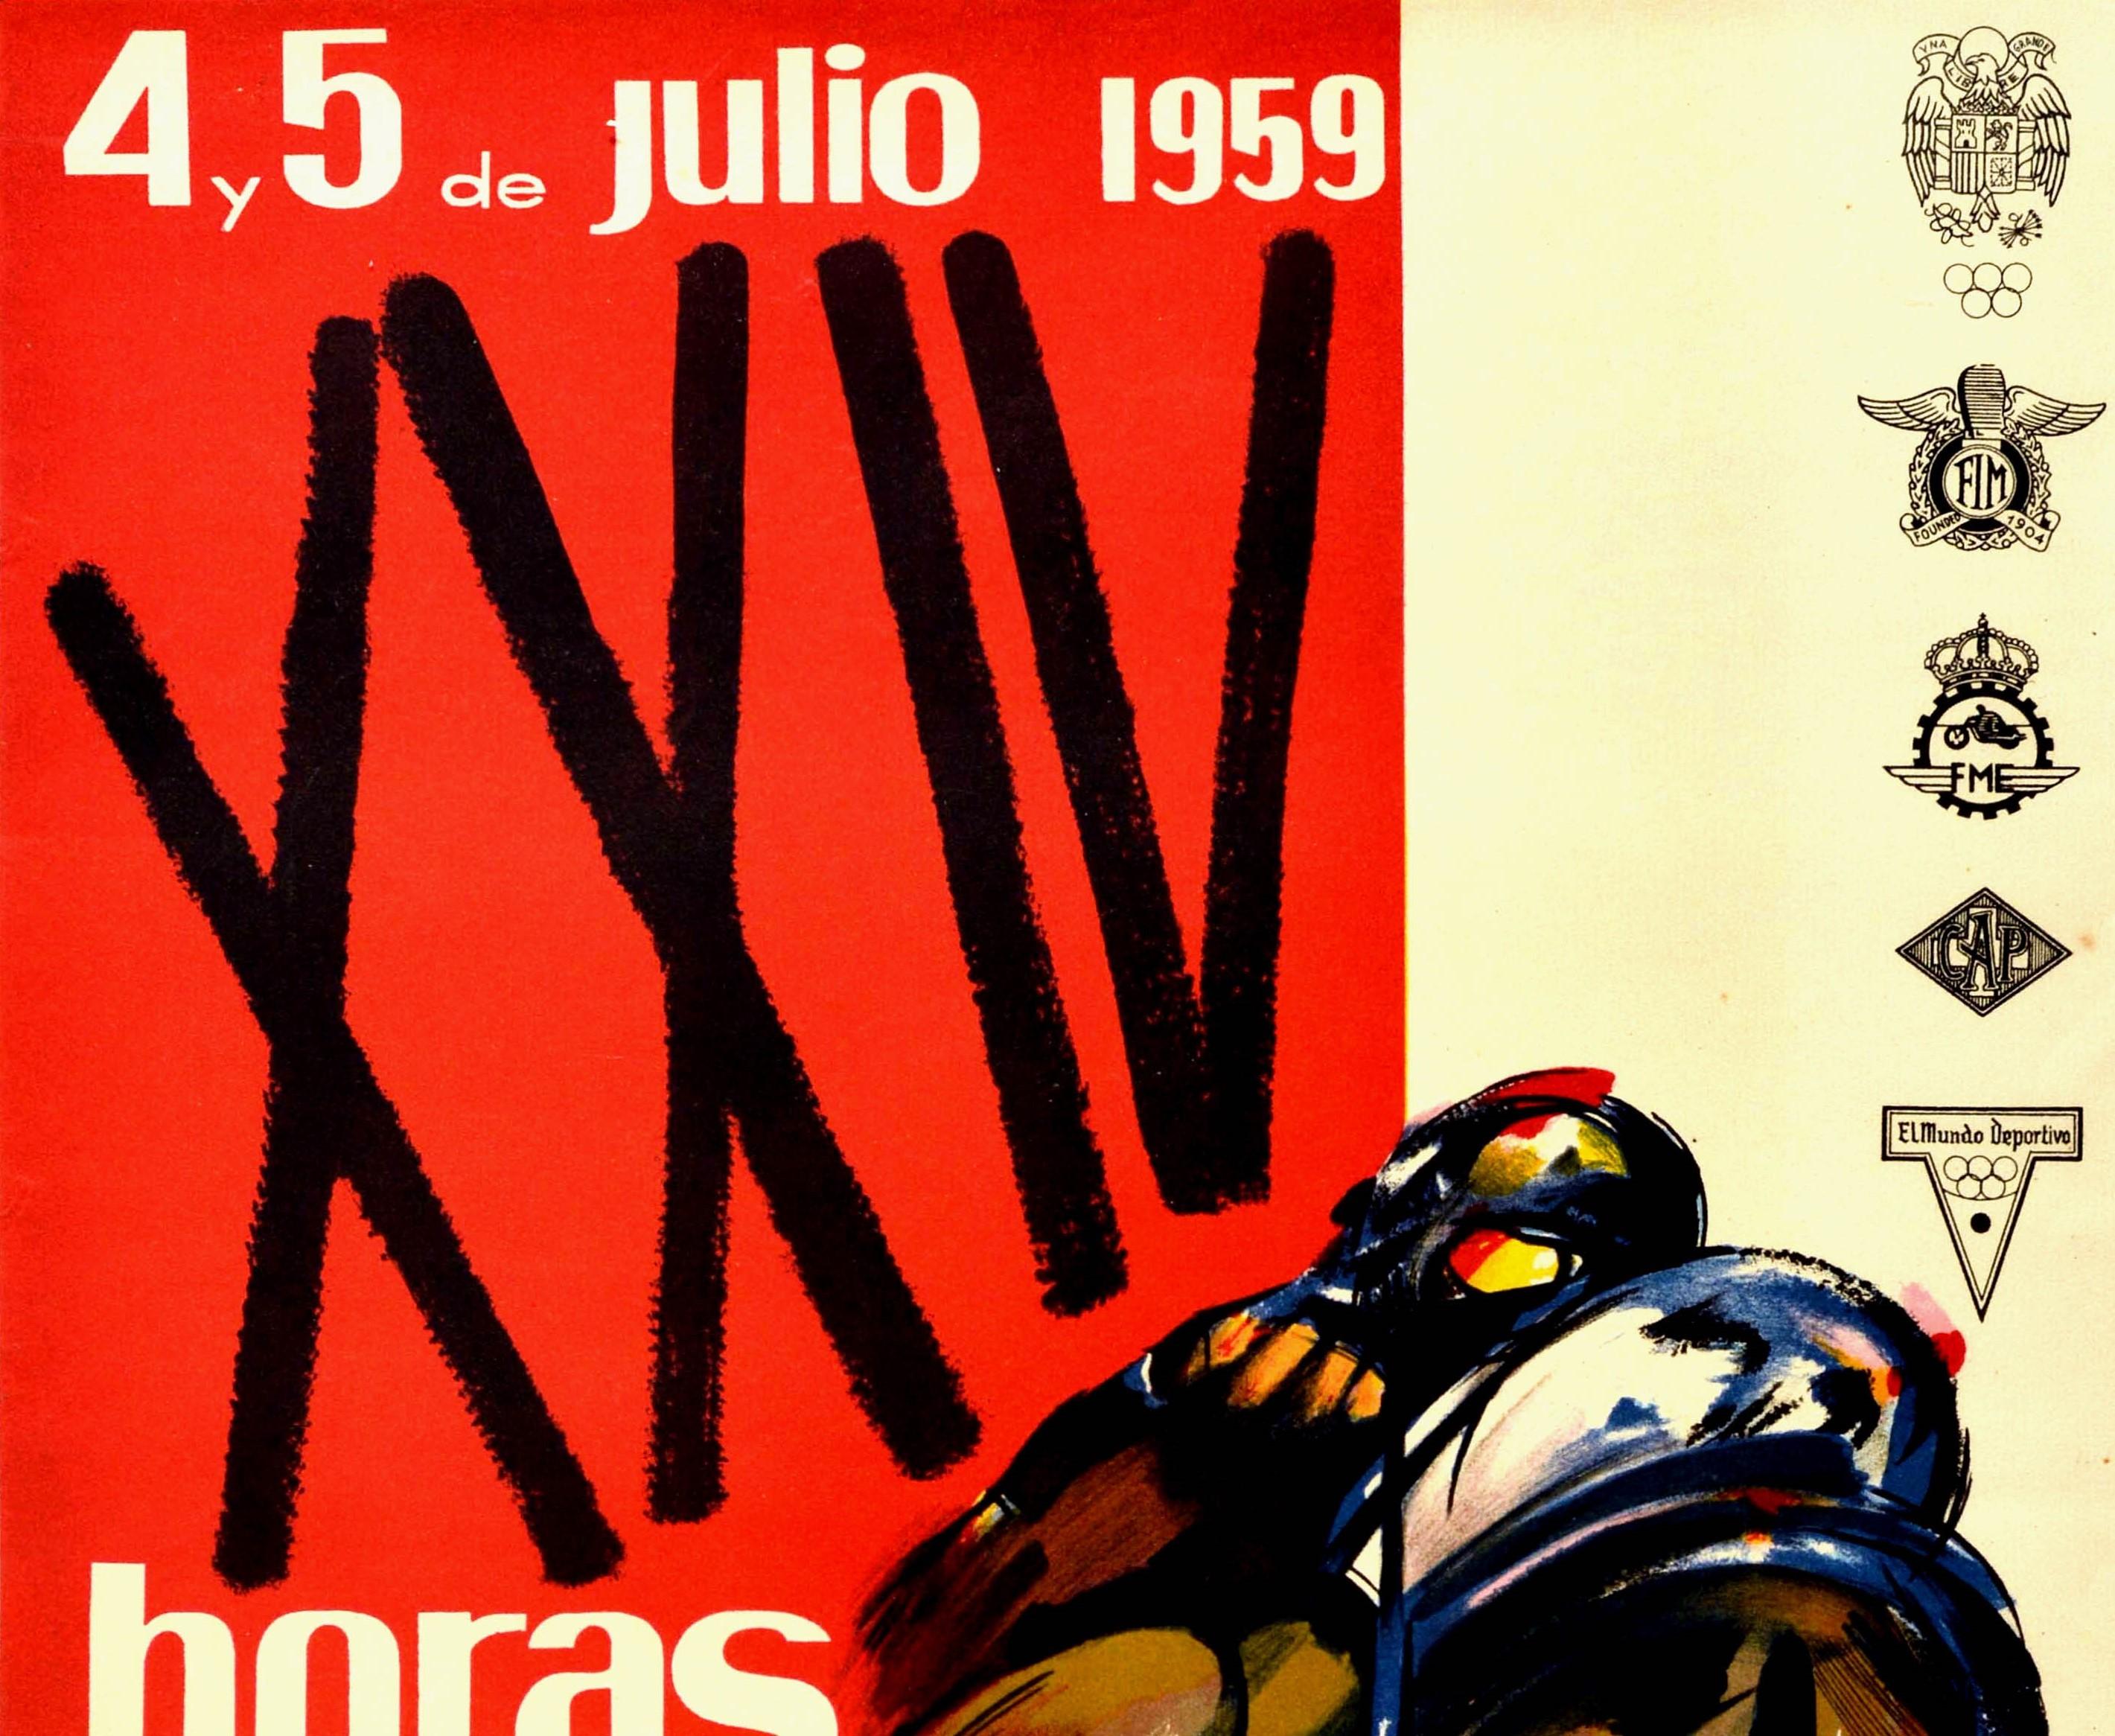 Original Vintage Poster 24 Hours Montjuich Motorcycle Race Grand Prix Barcelona - Print by Beltran Botill